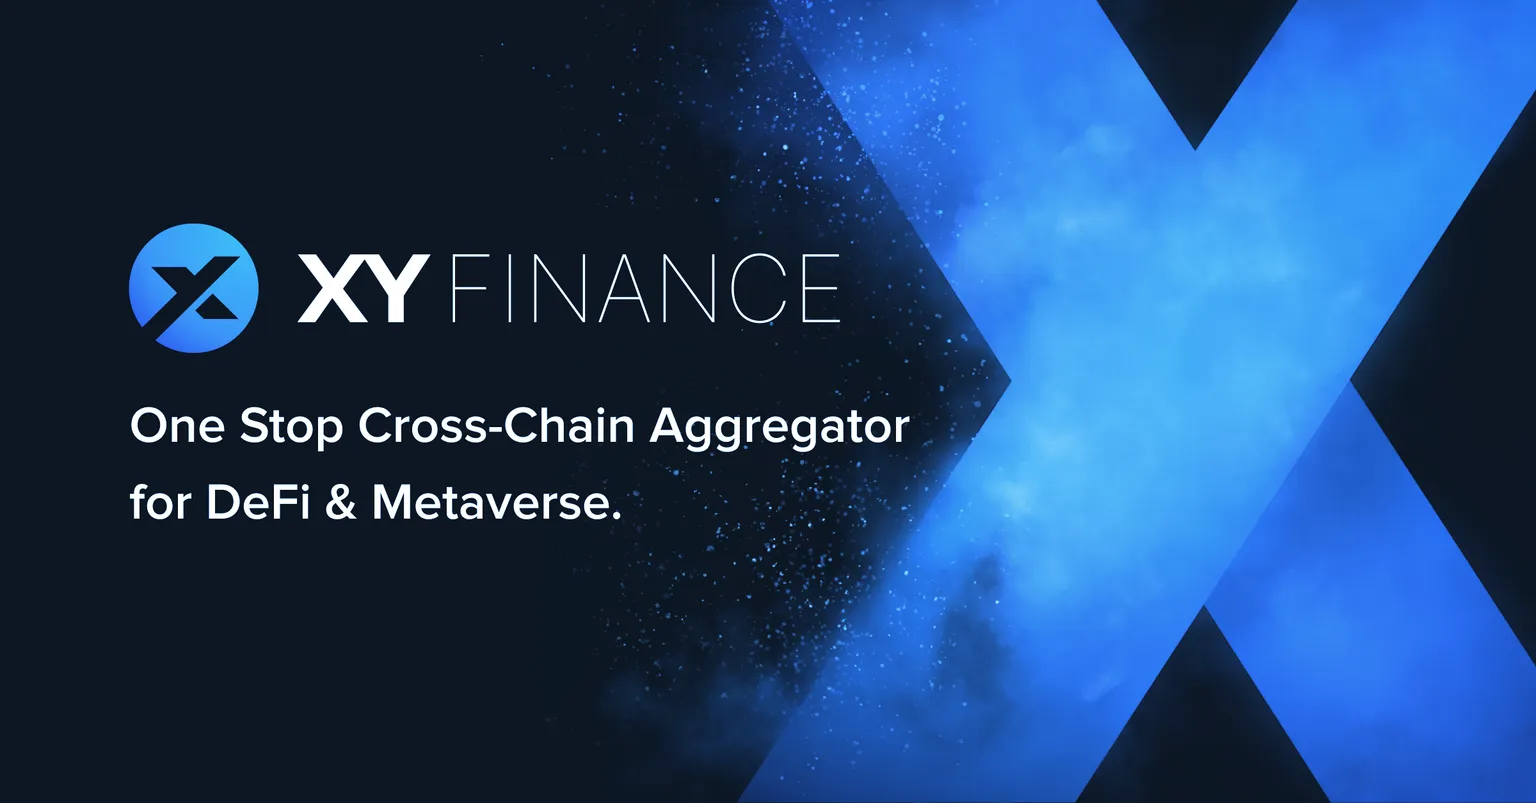 XY Finance is a cross-chain aggregation platform. Image: XY Finance